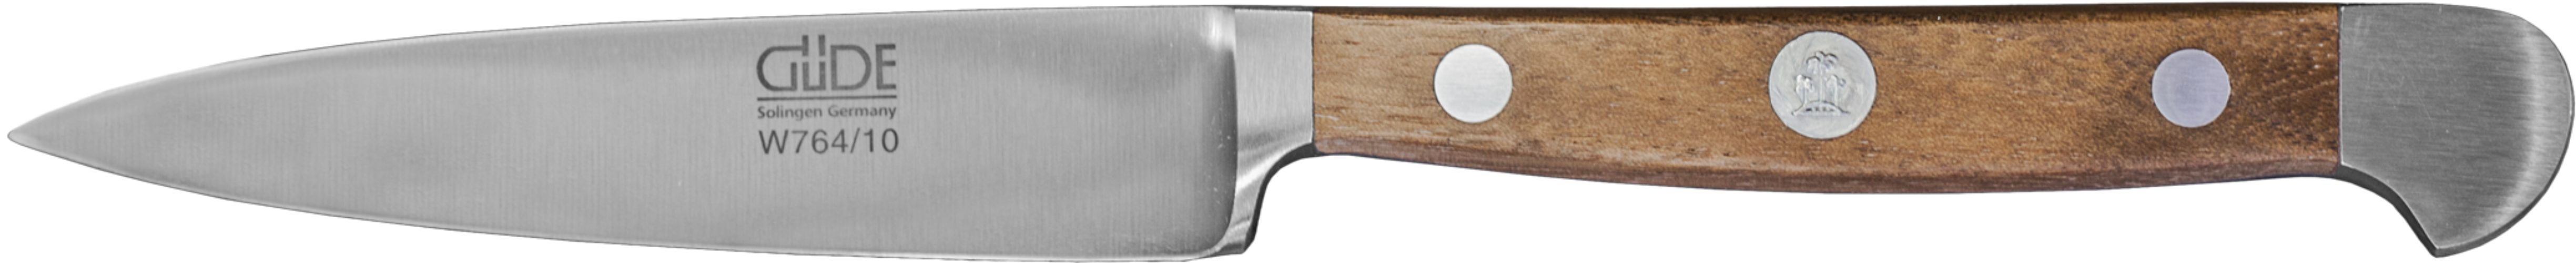 Alpha Walnuss, Messer Spickmesser geschmiedet, Güde No. W764/10 Solingen Spickmesser, Serie kleines